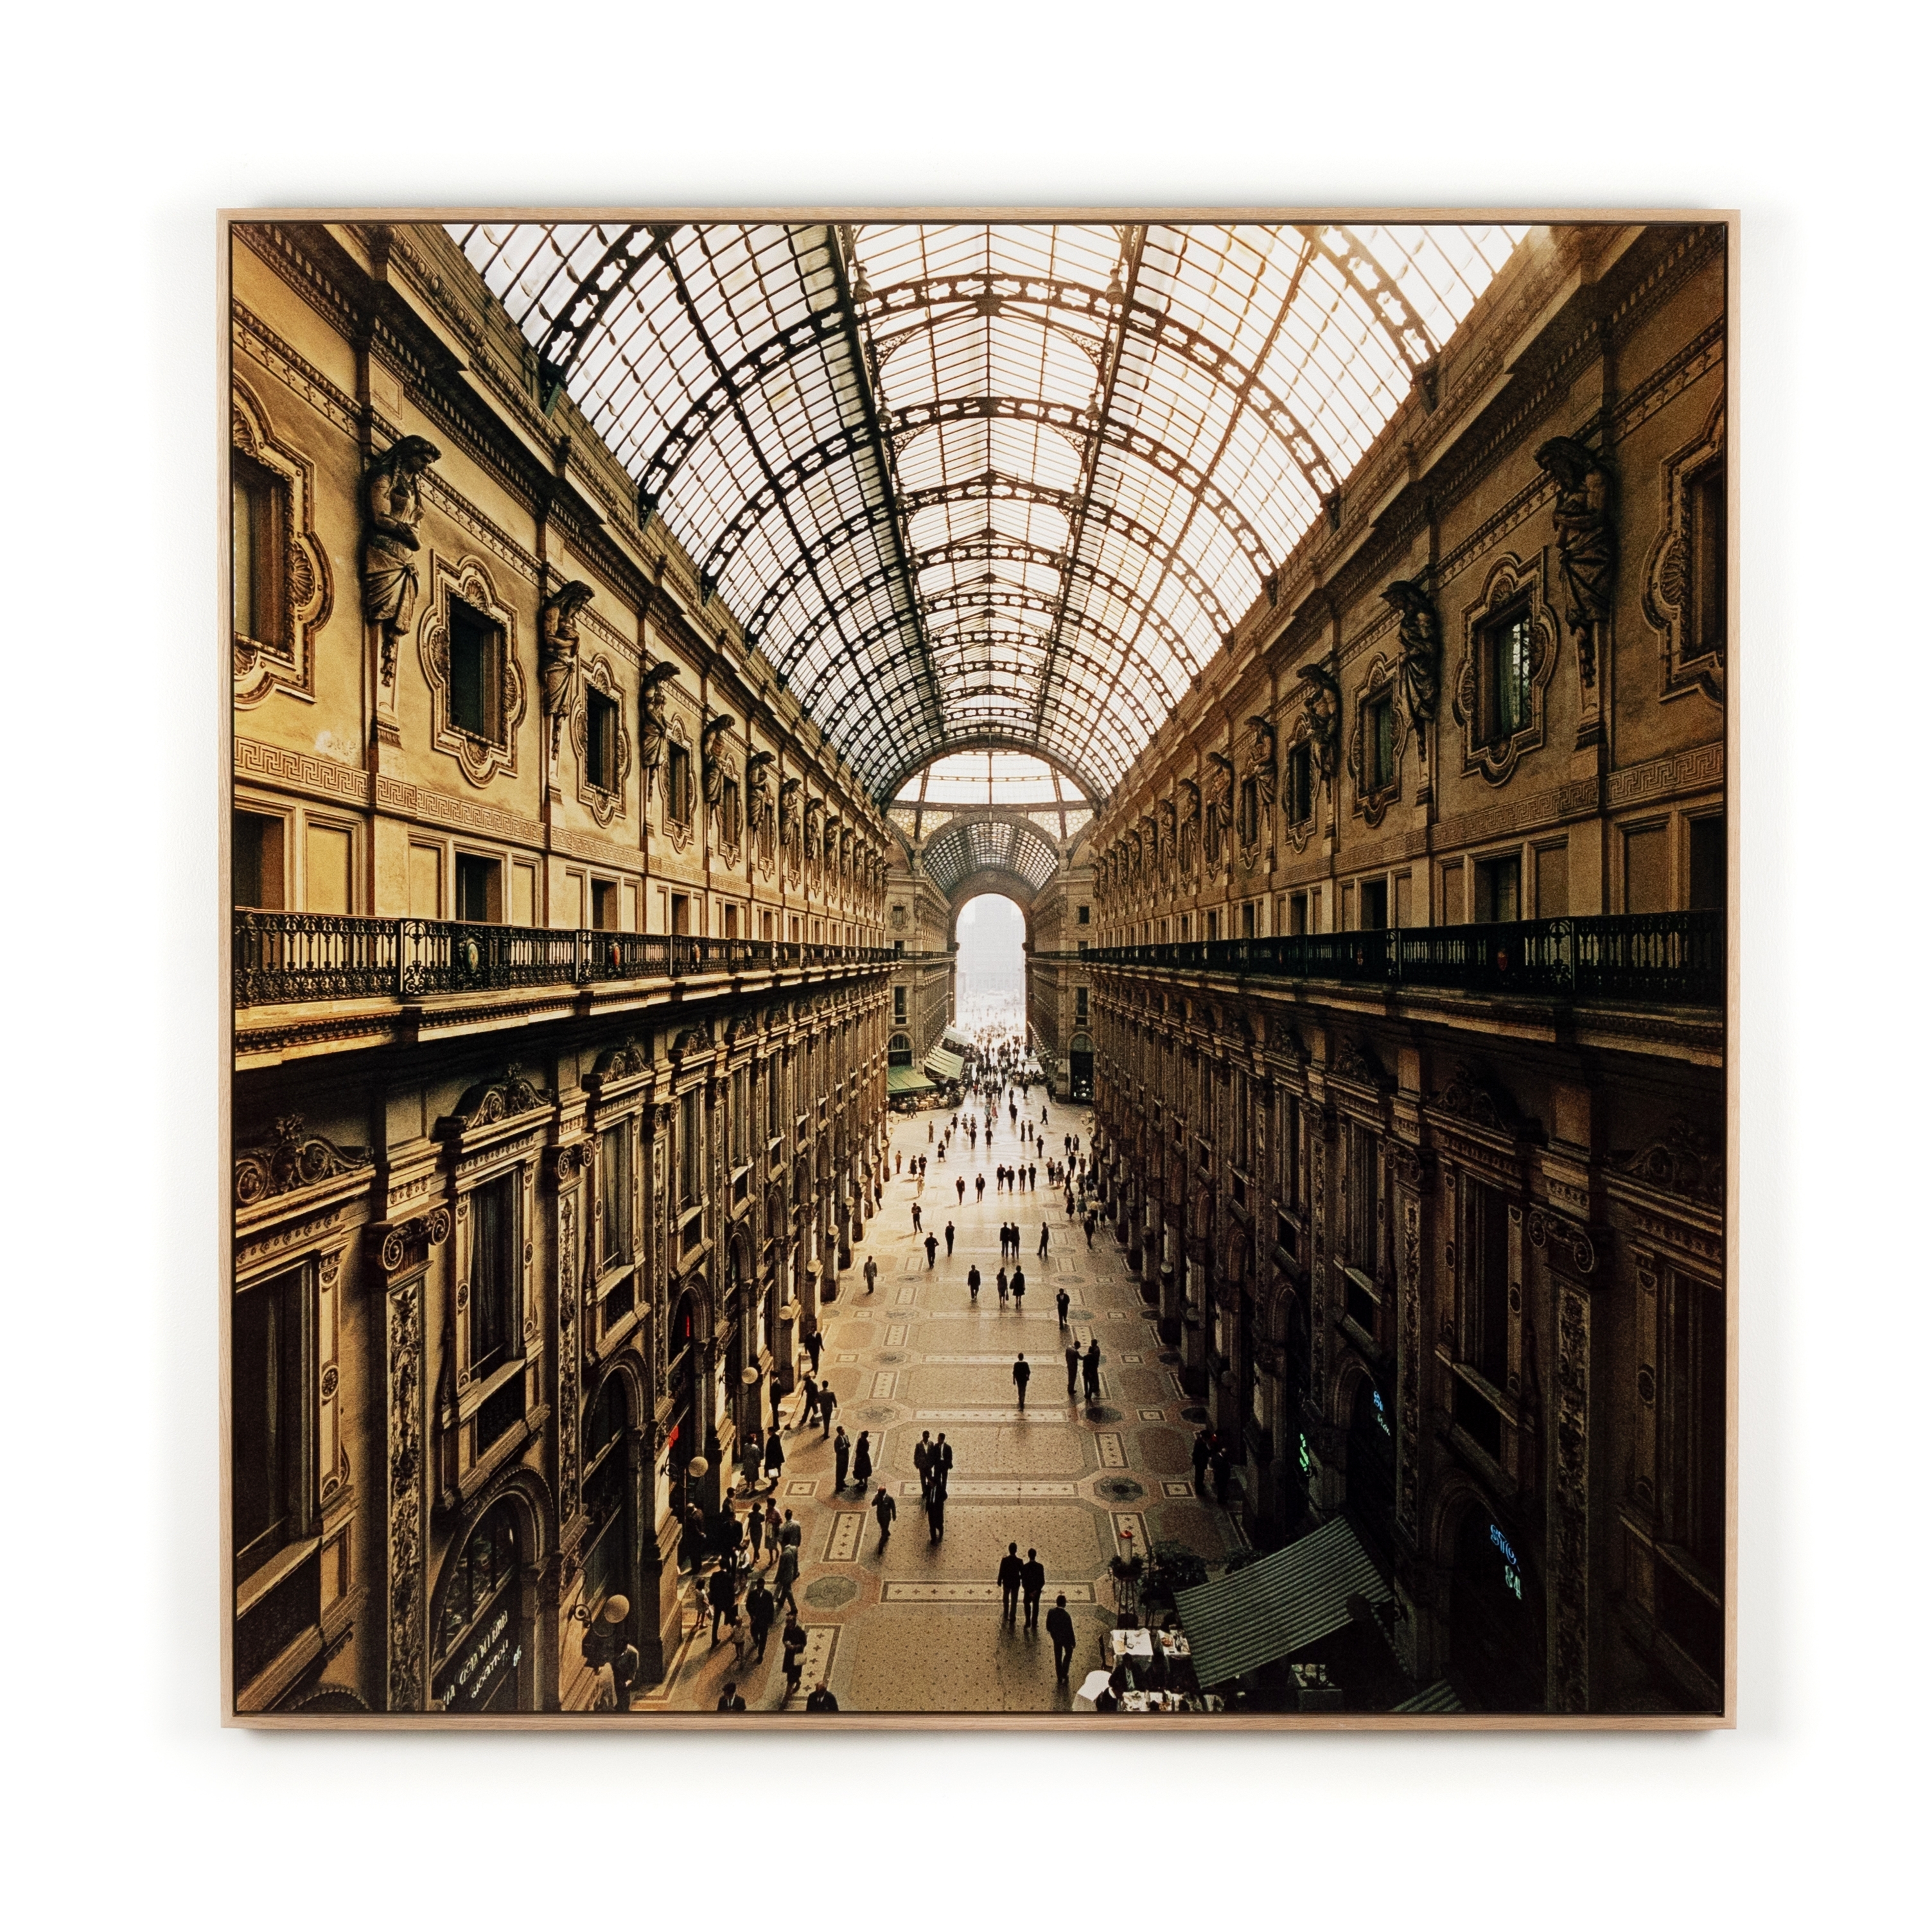 Galleria Vittorio Emanuele Ii By Slim Aa - Image 0